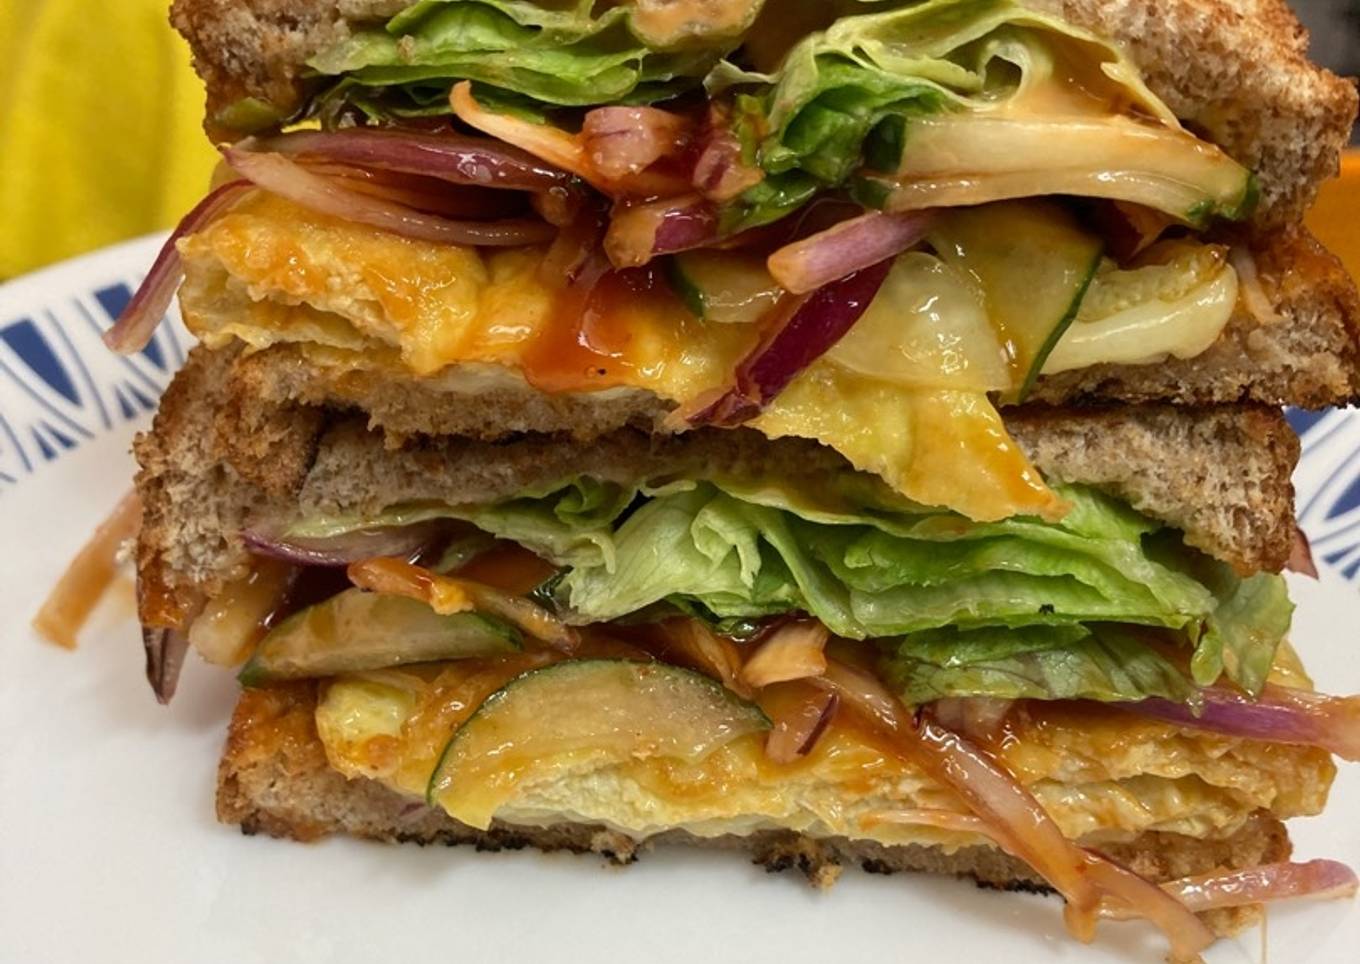 Resepi Sandwich sihat ala subway yang Lazat dan Gampang